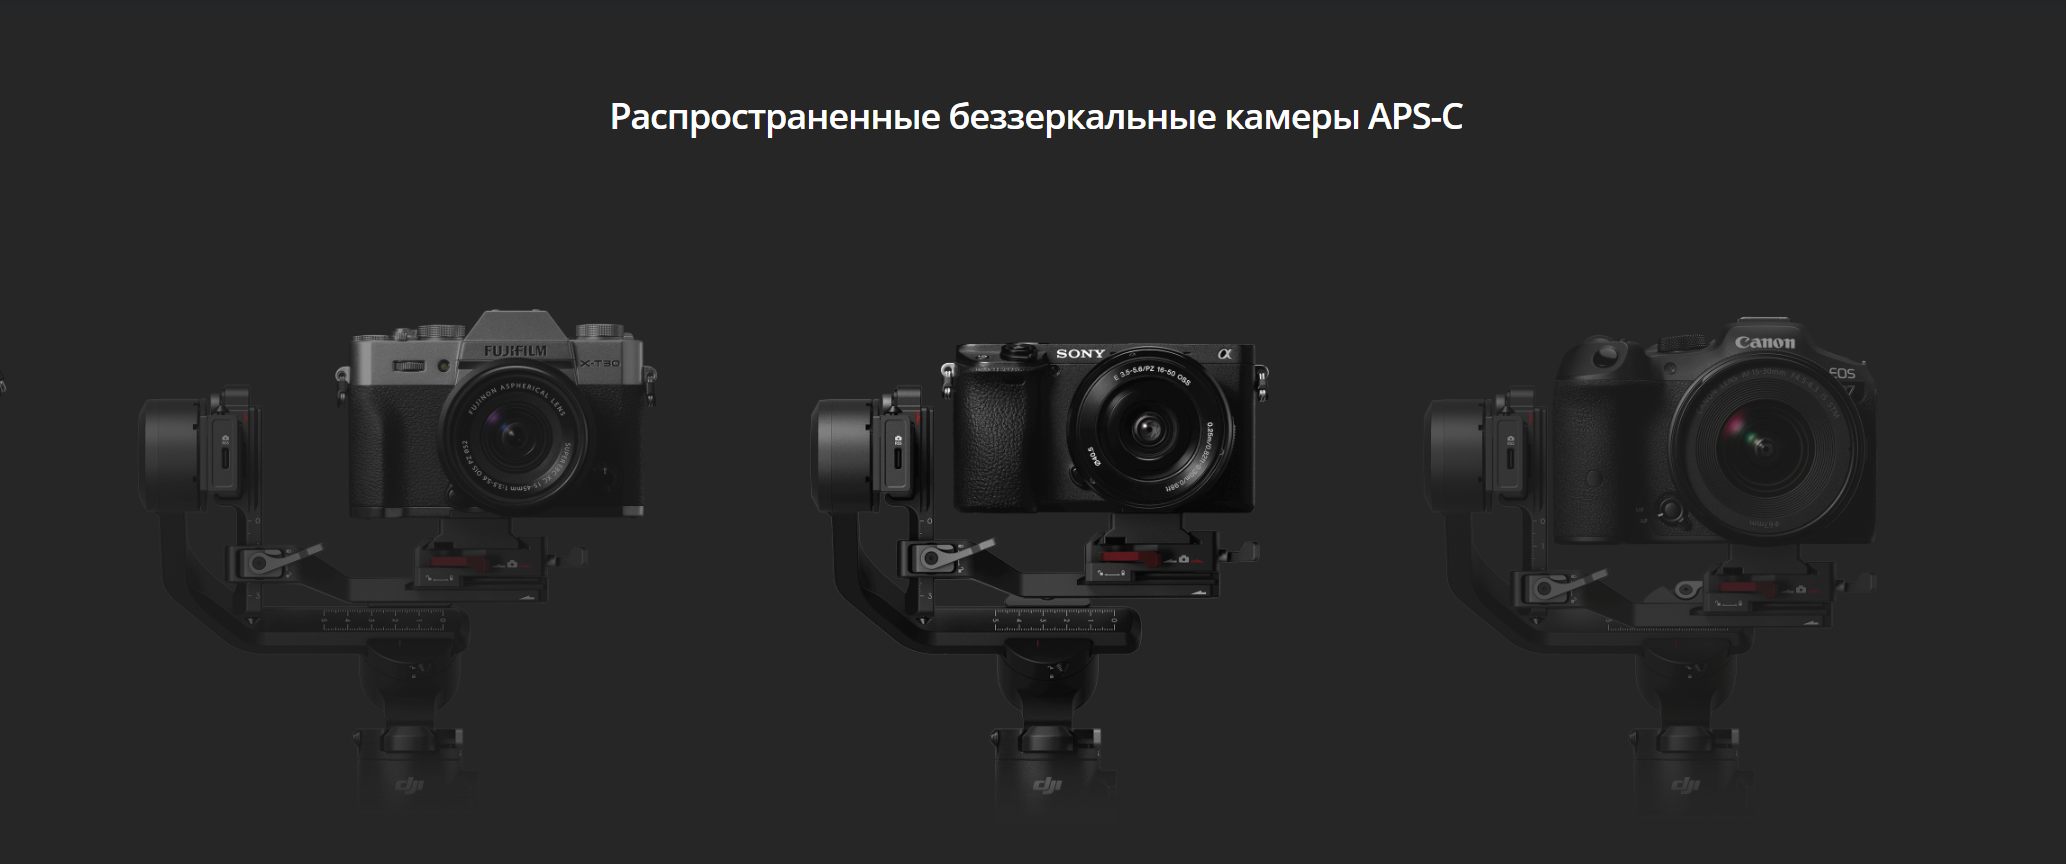 RS 3 Mini bezzerkalnie kameri APS-C